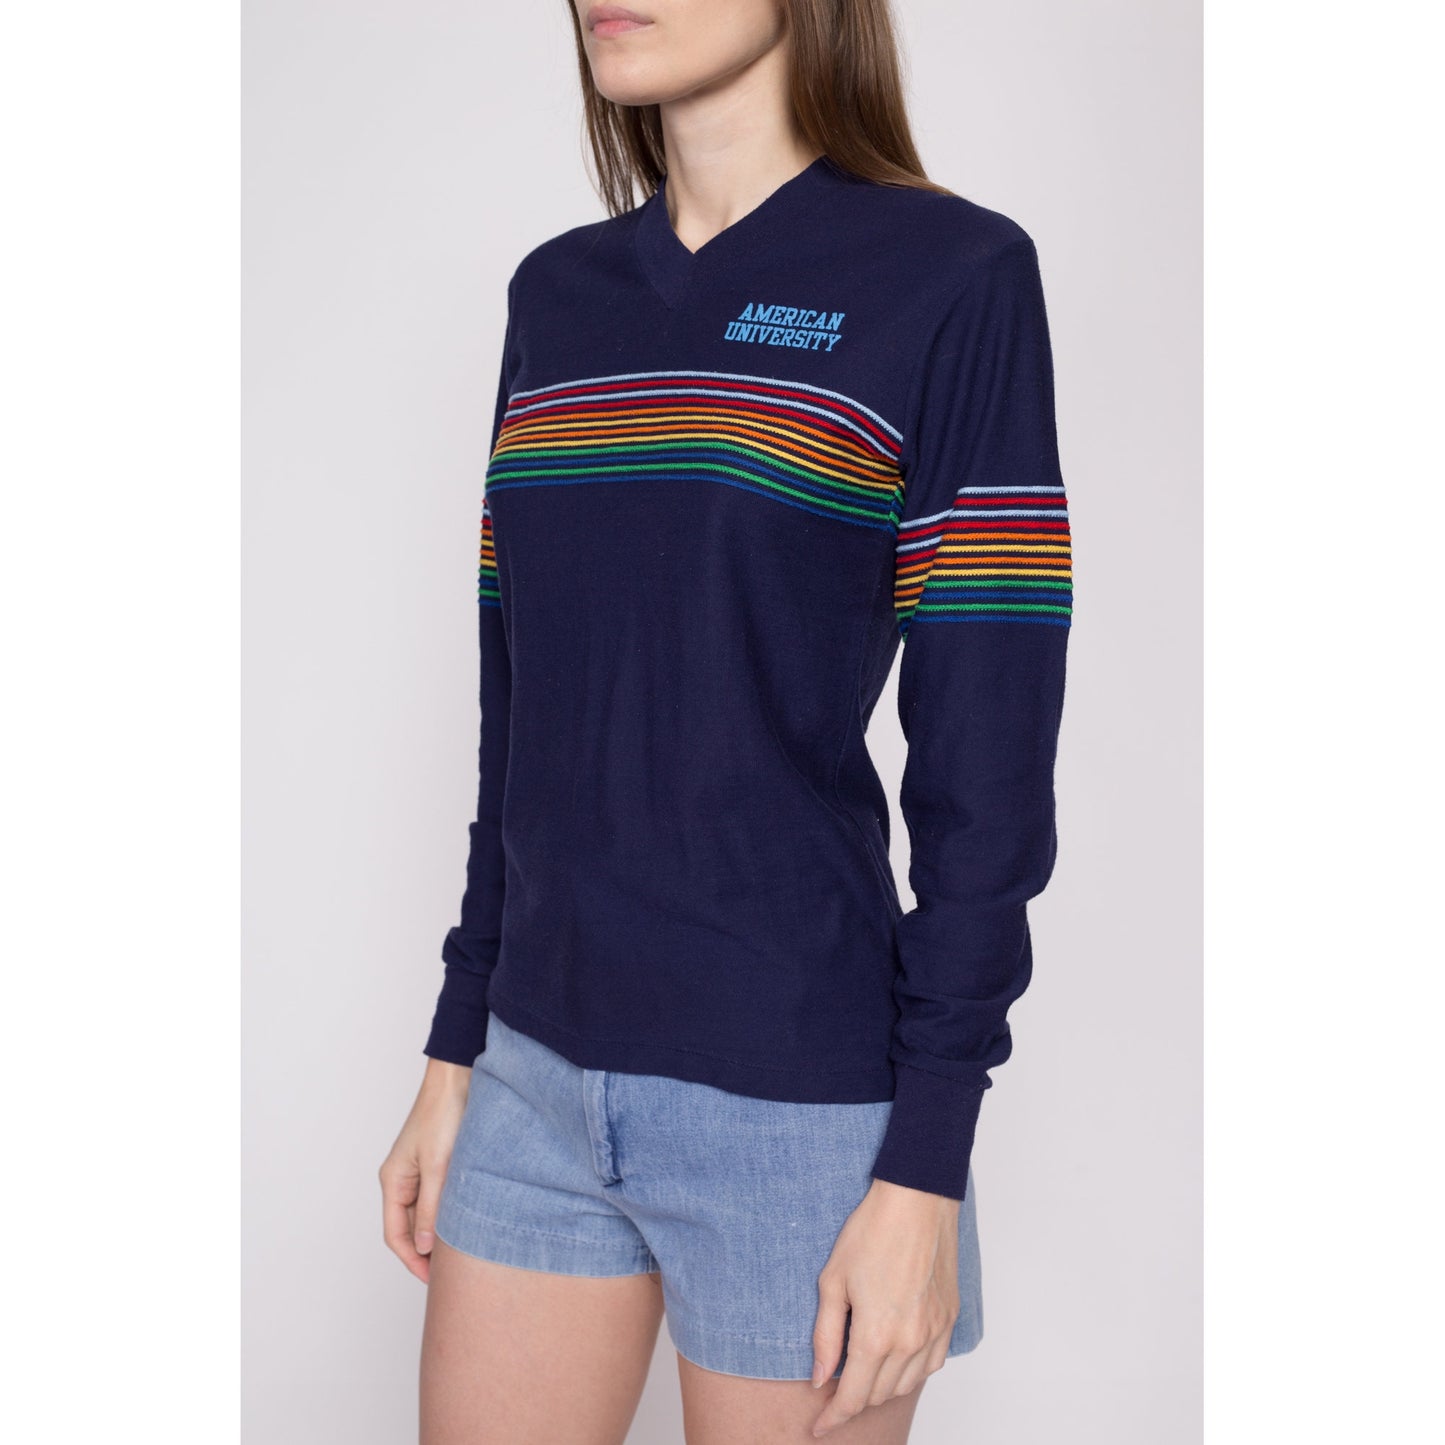 S| 70s American University Rainbow Striped Shirt - Unisex Small | Vintage Navy Blue Retro Long Sleeved Graphic University Tee